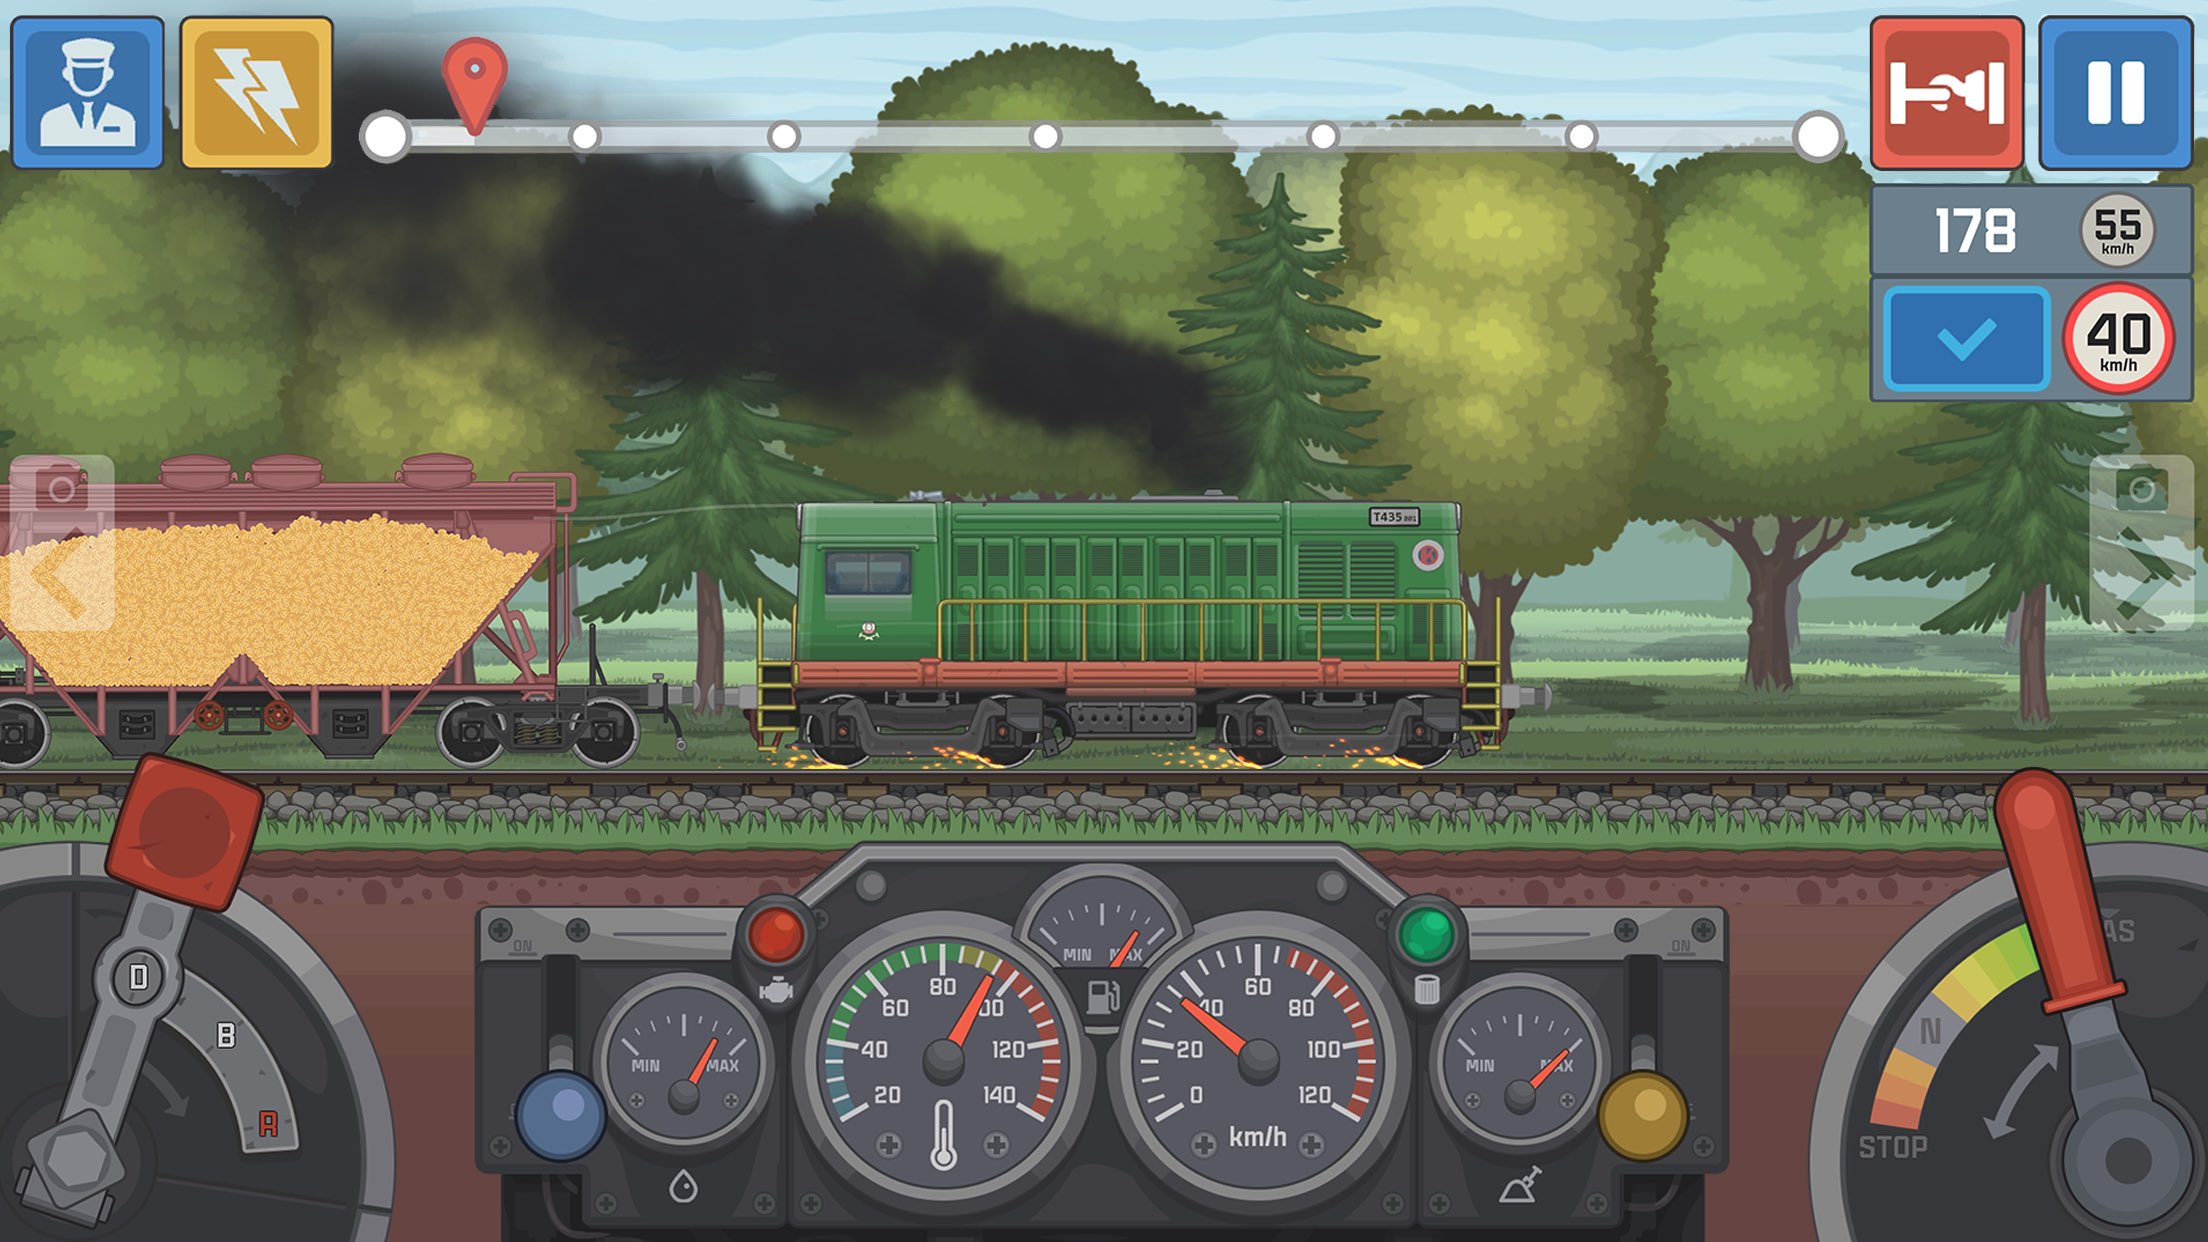 Поезд игра 2д. Train игра 2d. Симулятор поезда 2д. Игра поезда Railroads. Железная дорога симулятор андроид.